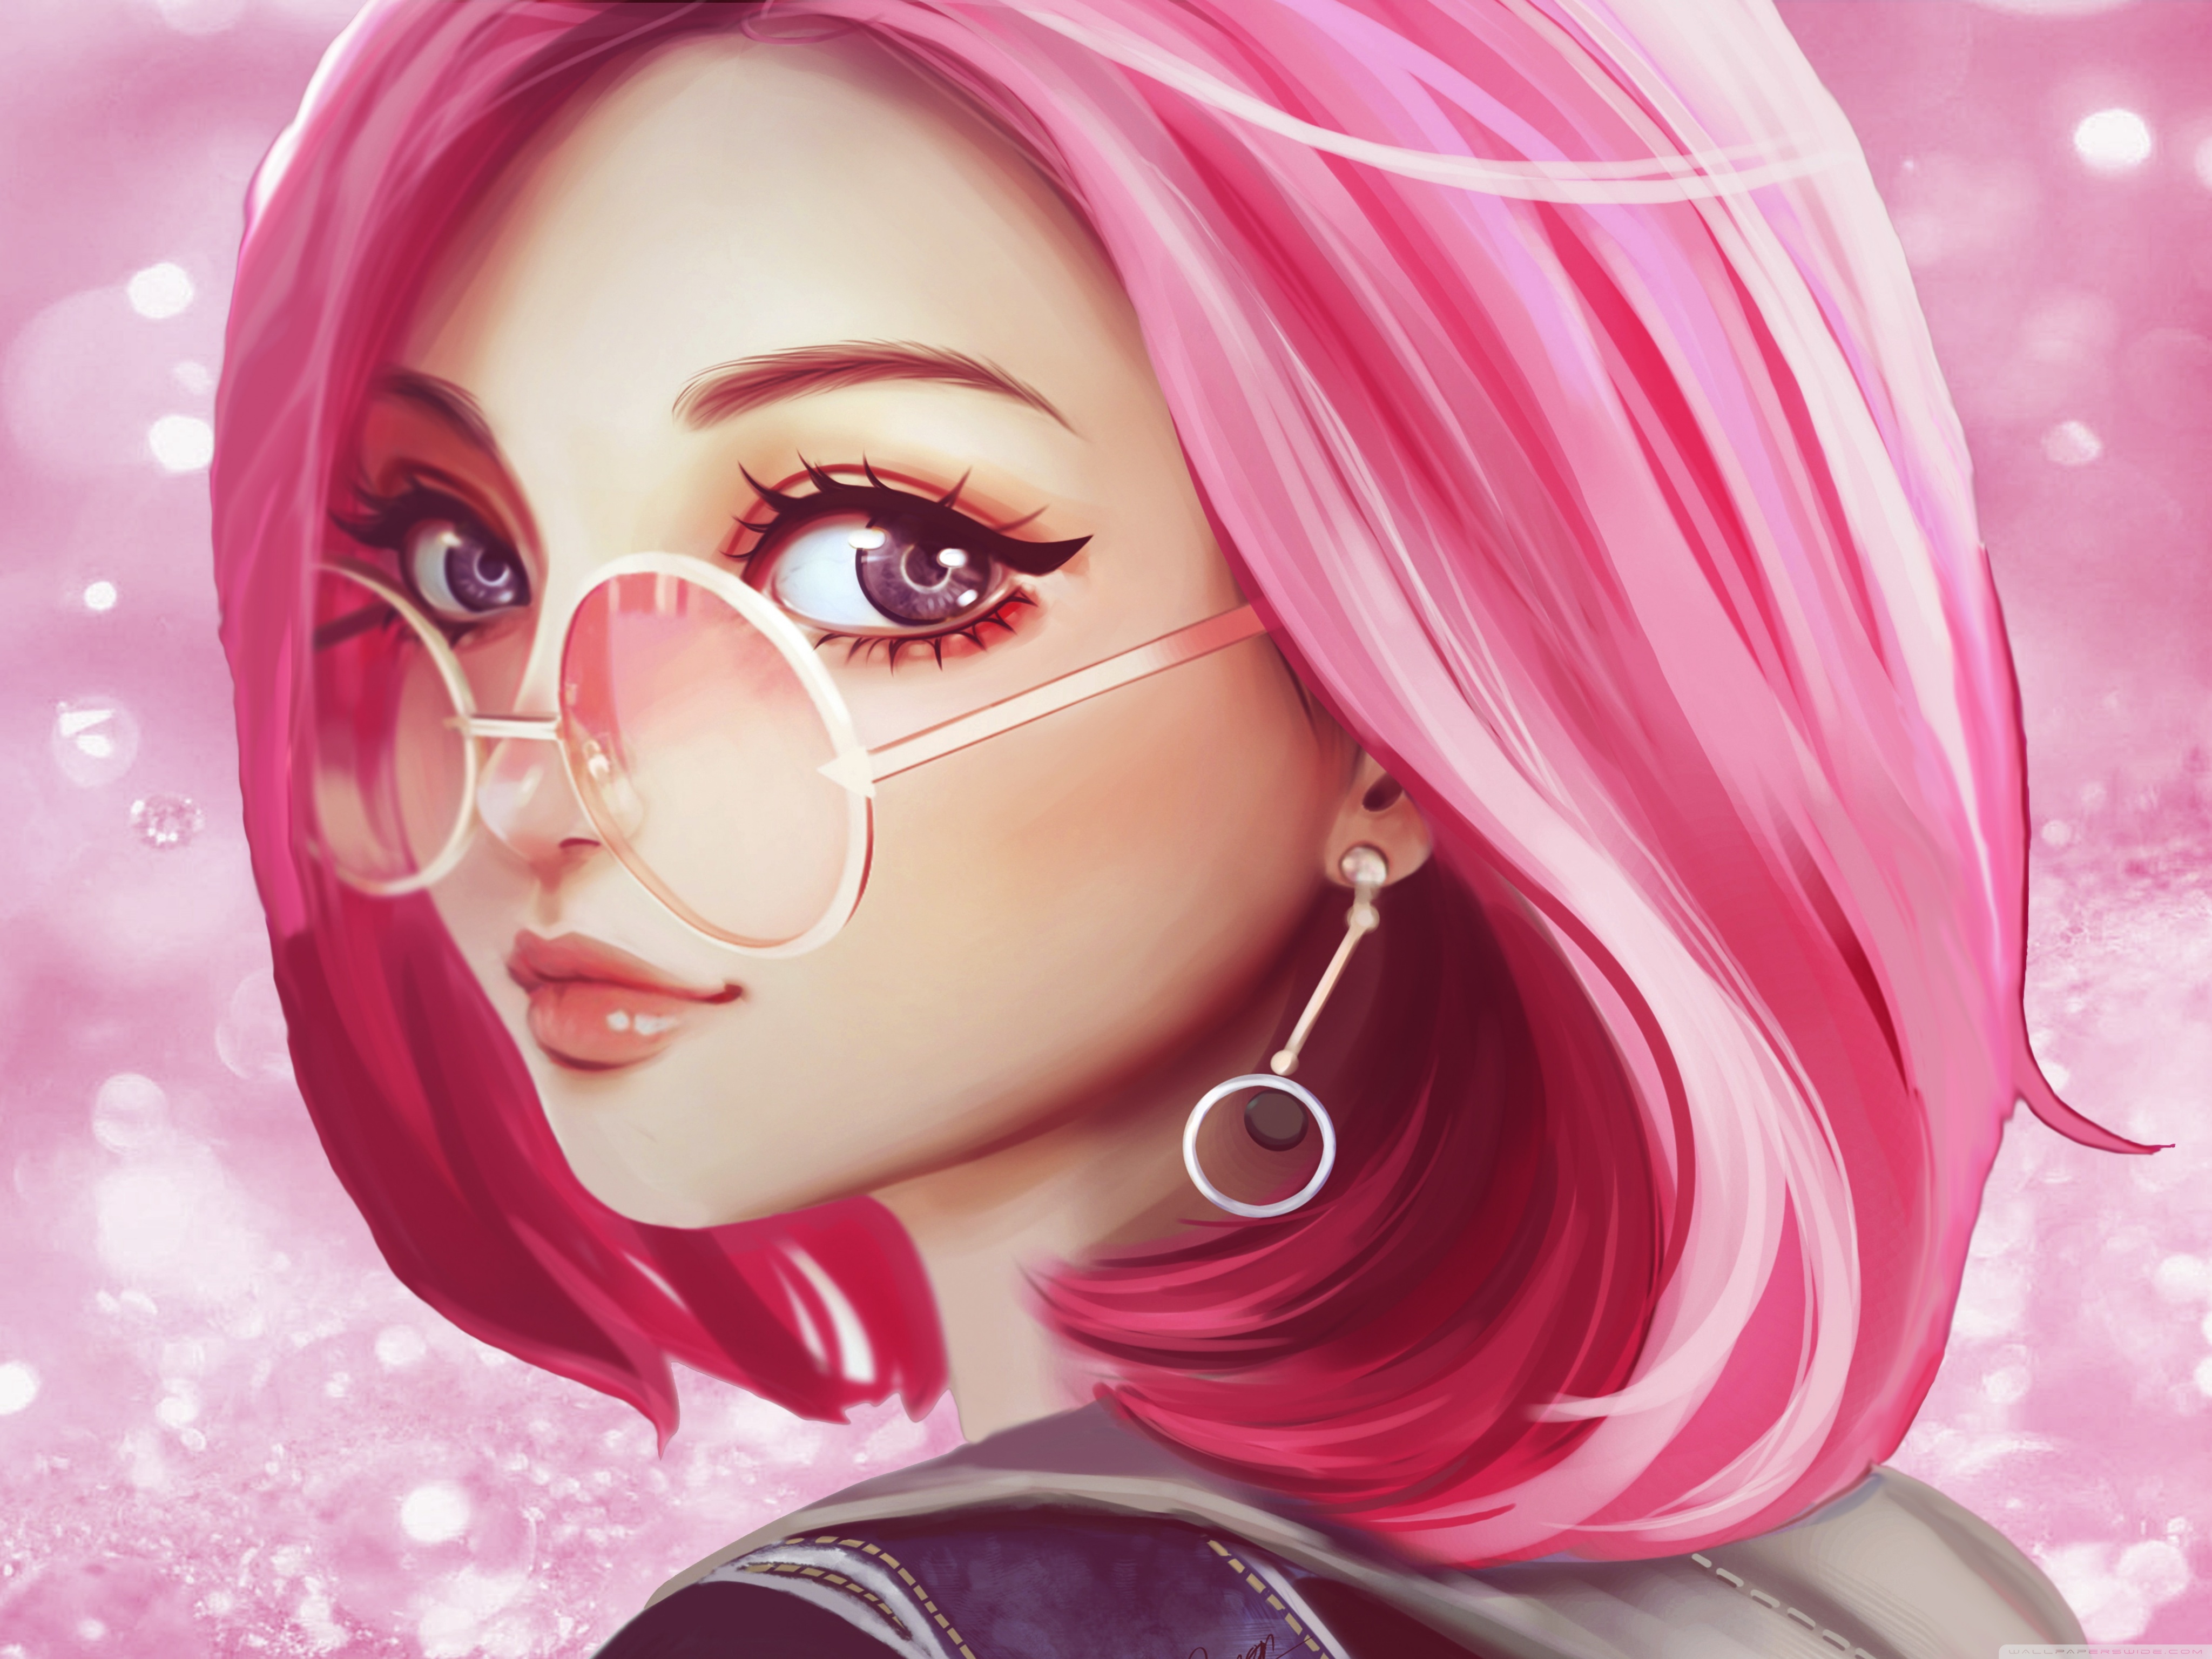 Cute Girl Pink Hair Sunglasses Digital Art Drawing Ultra HD Desktop Background  Wallpaper for 4K UHD TV  Widescreen  UltraWide Desktop  Laptop  Multi  Display Dual  Triple Monitor  Tablet  Smartphone